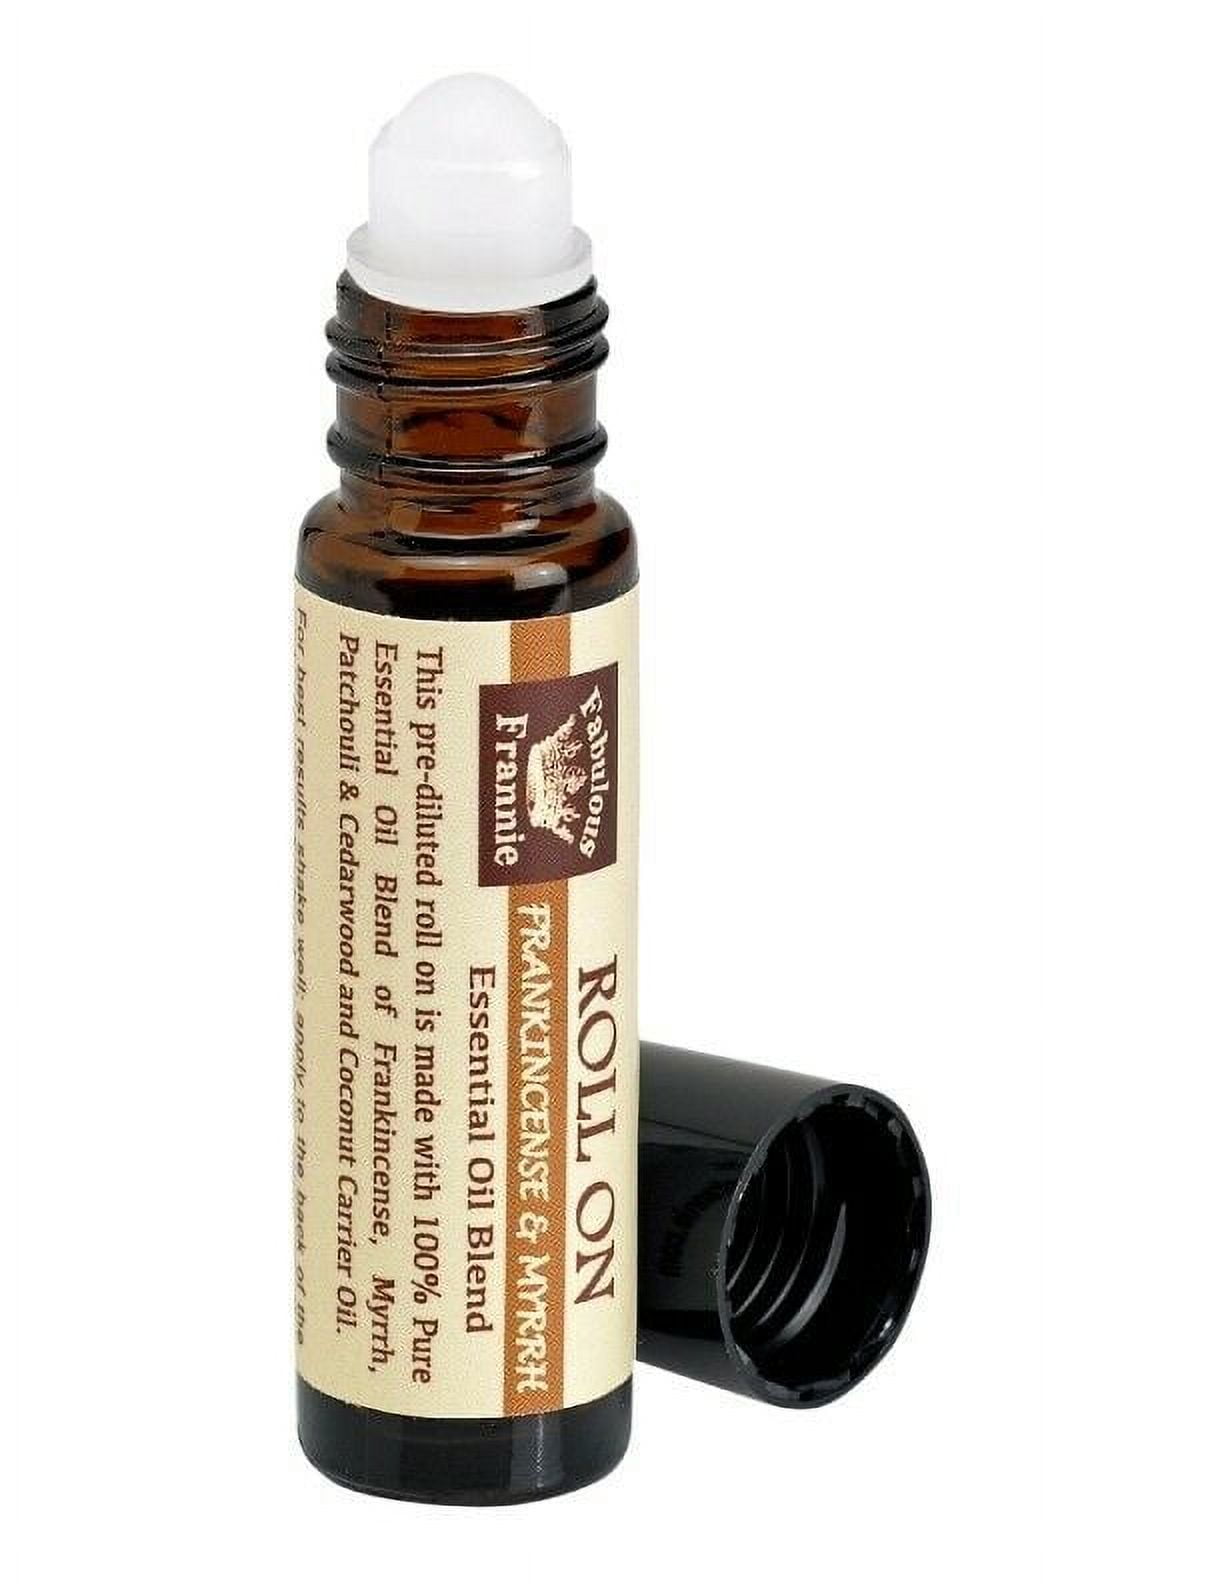 Frankincense & Sweet Myrrh Essential Oil Box Set – Balm of Gilead